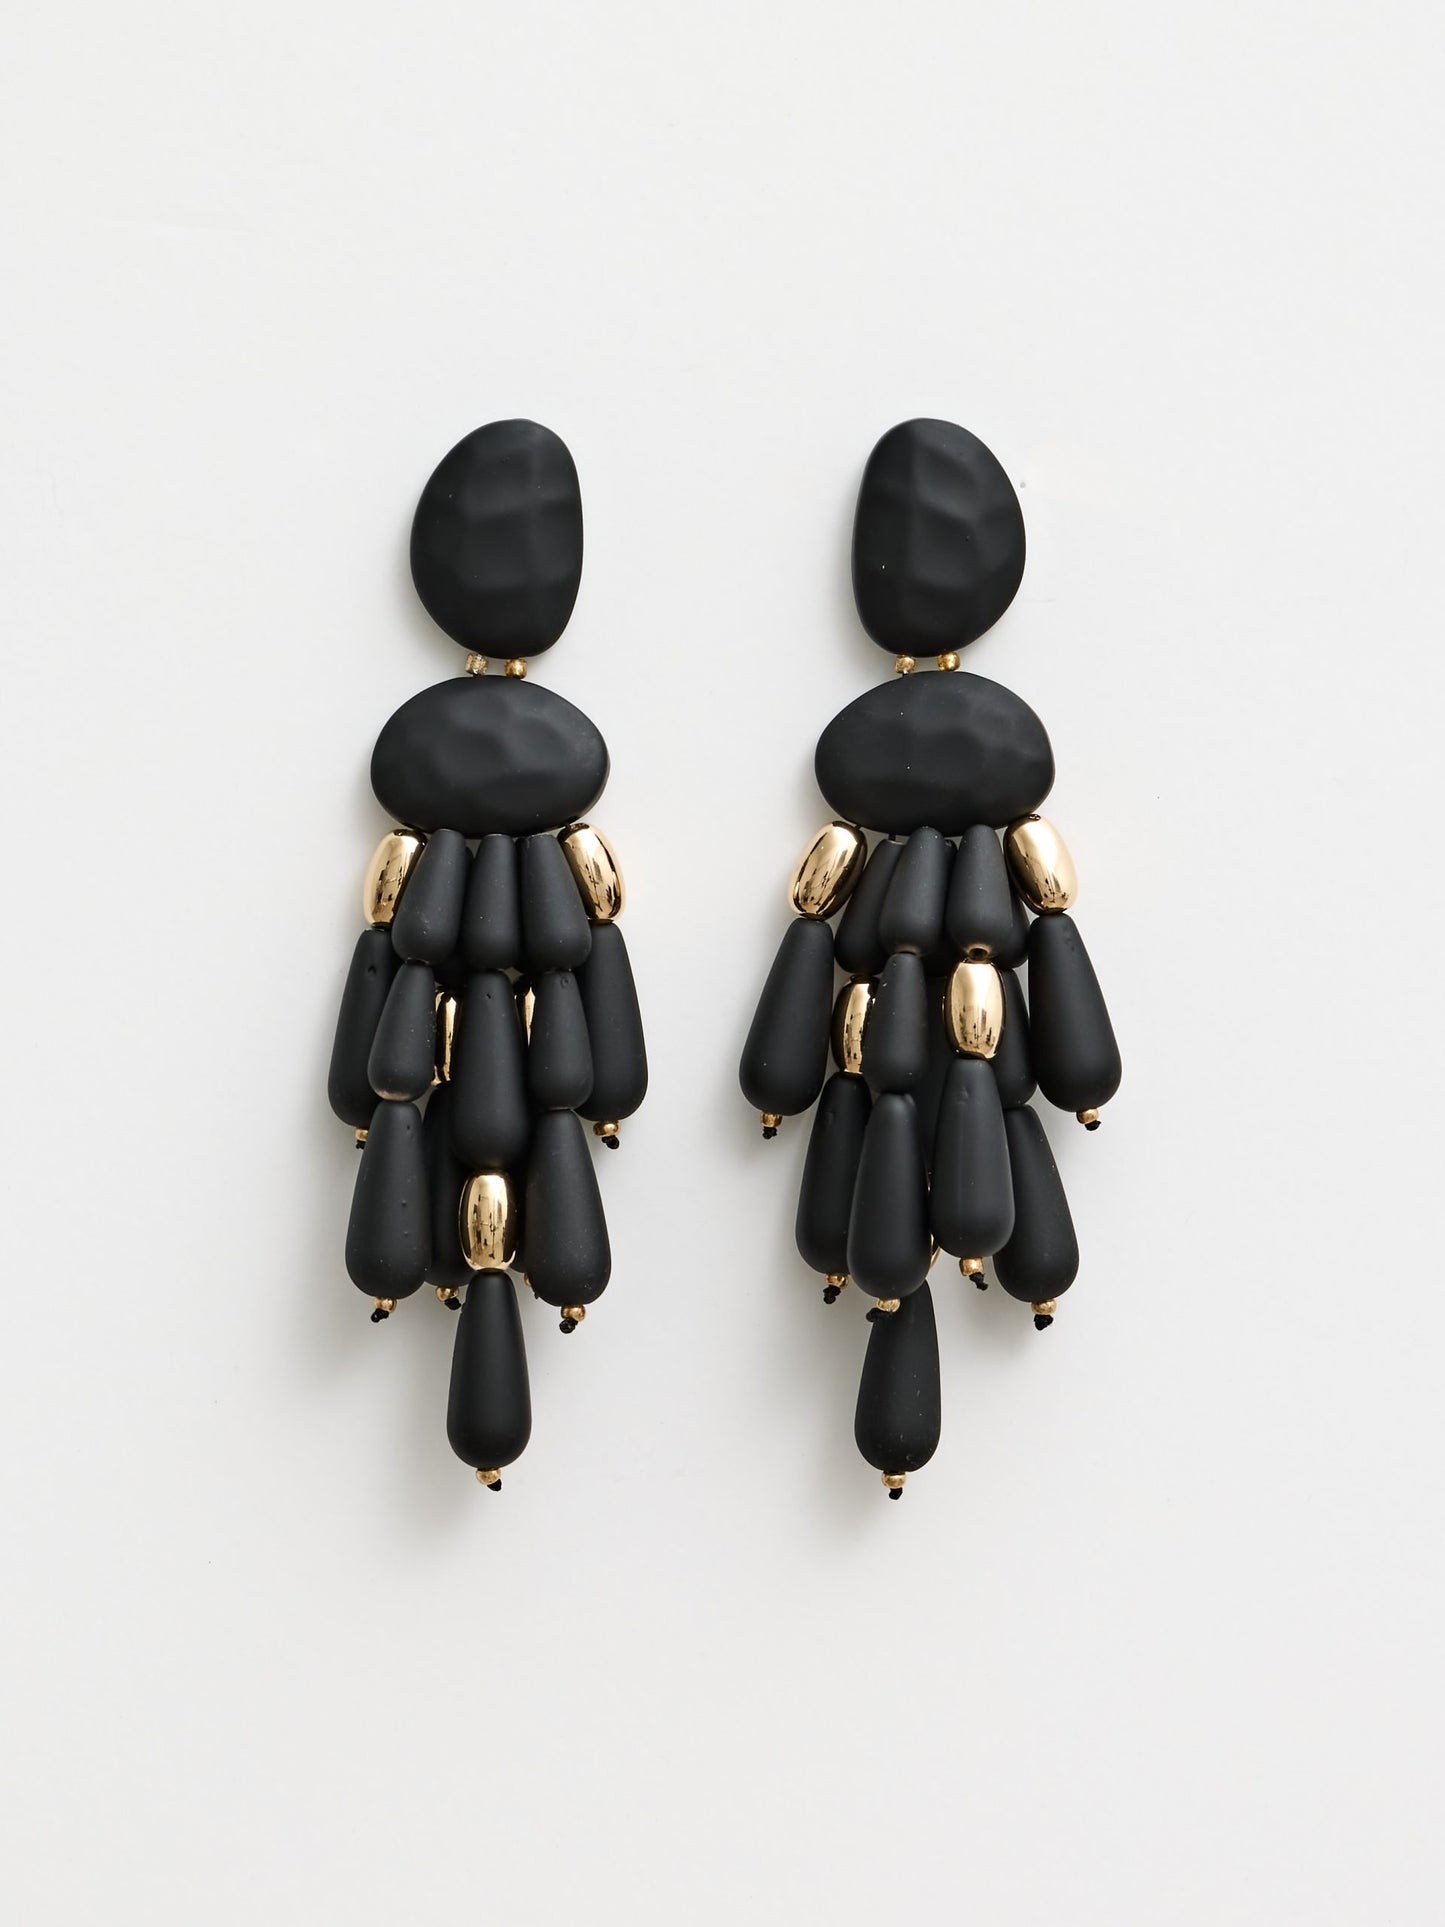 Black stalactite earrings